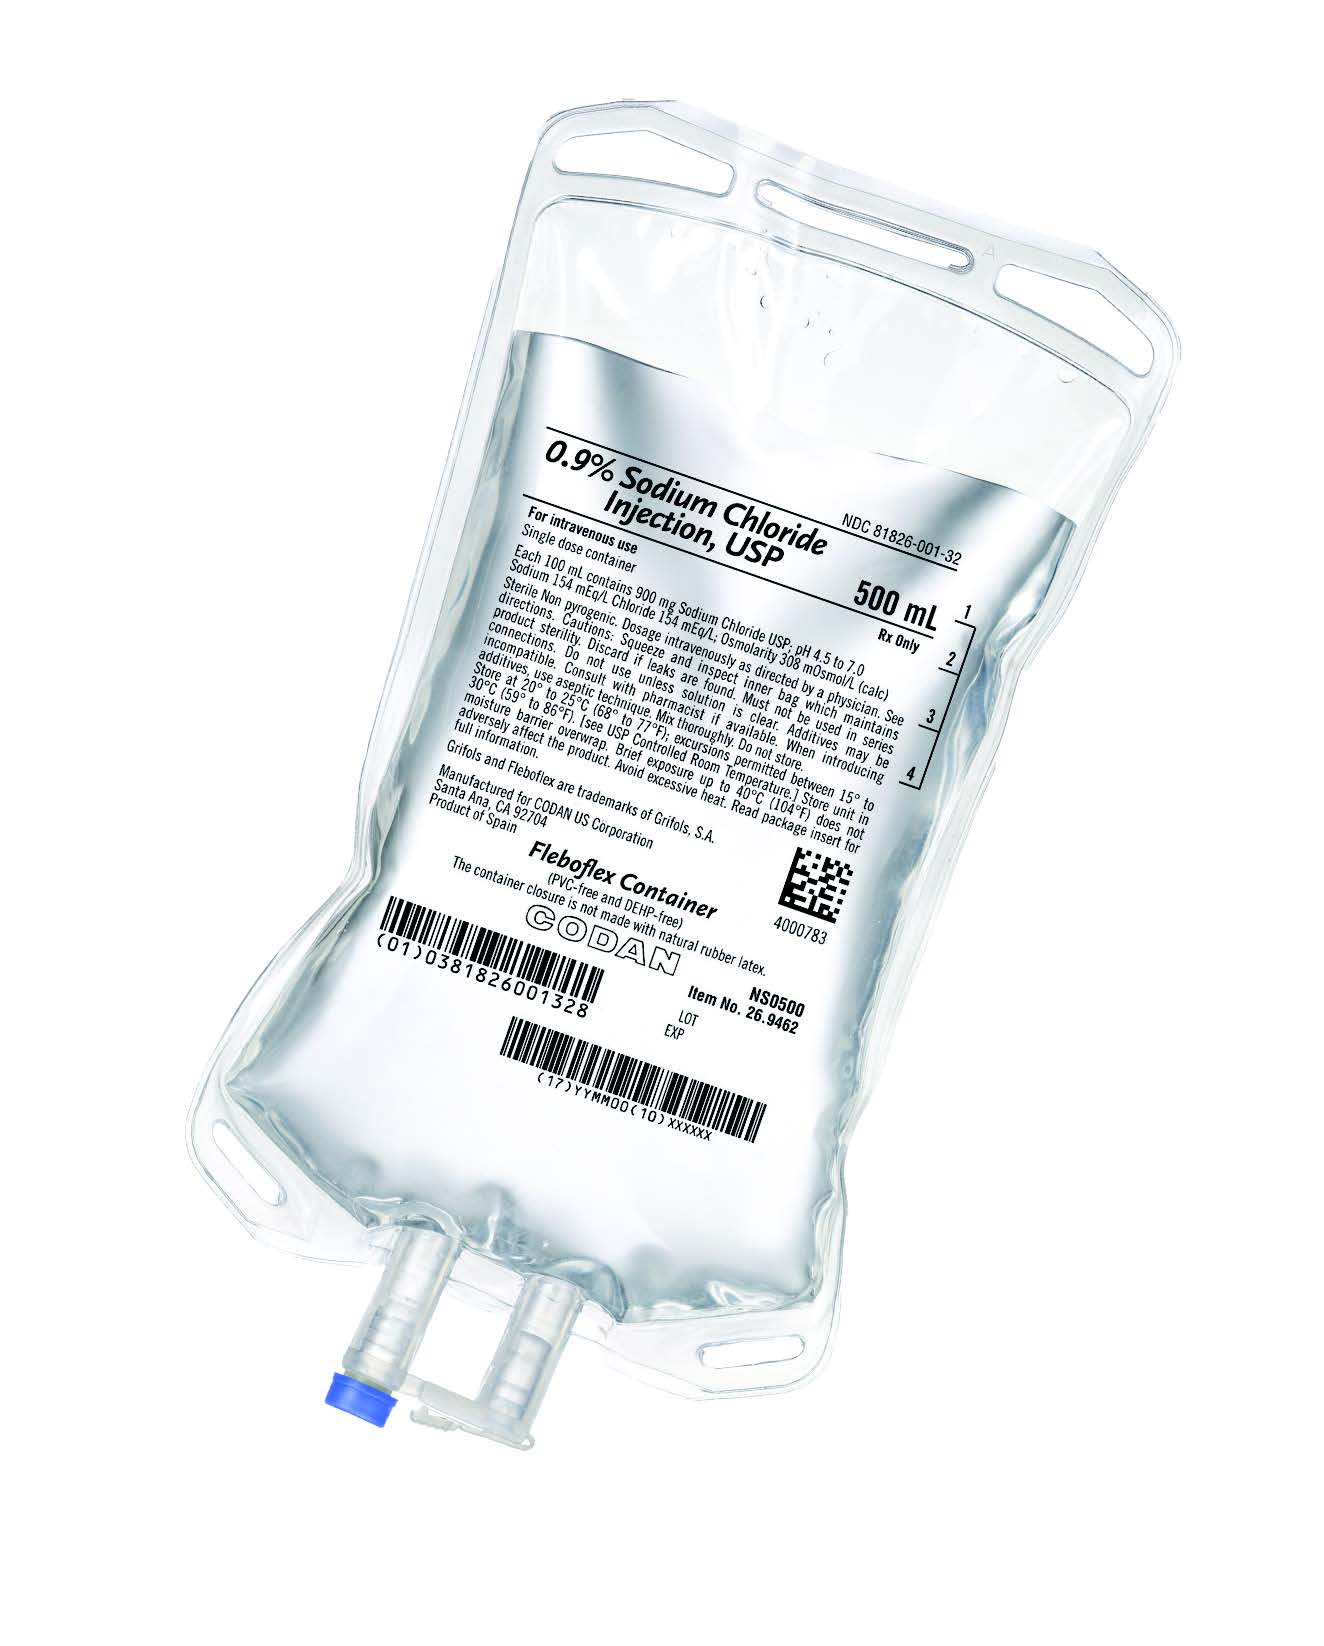 Normal Saline 09 Sodium Chloride 500ml Bag For Injection Usp  Medical  Mart